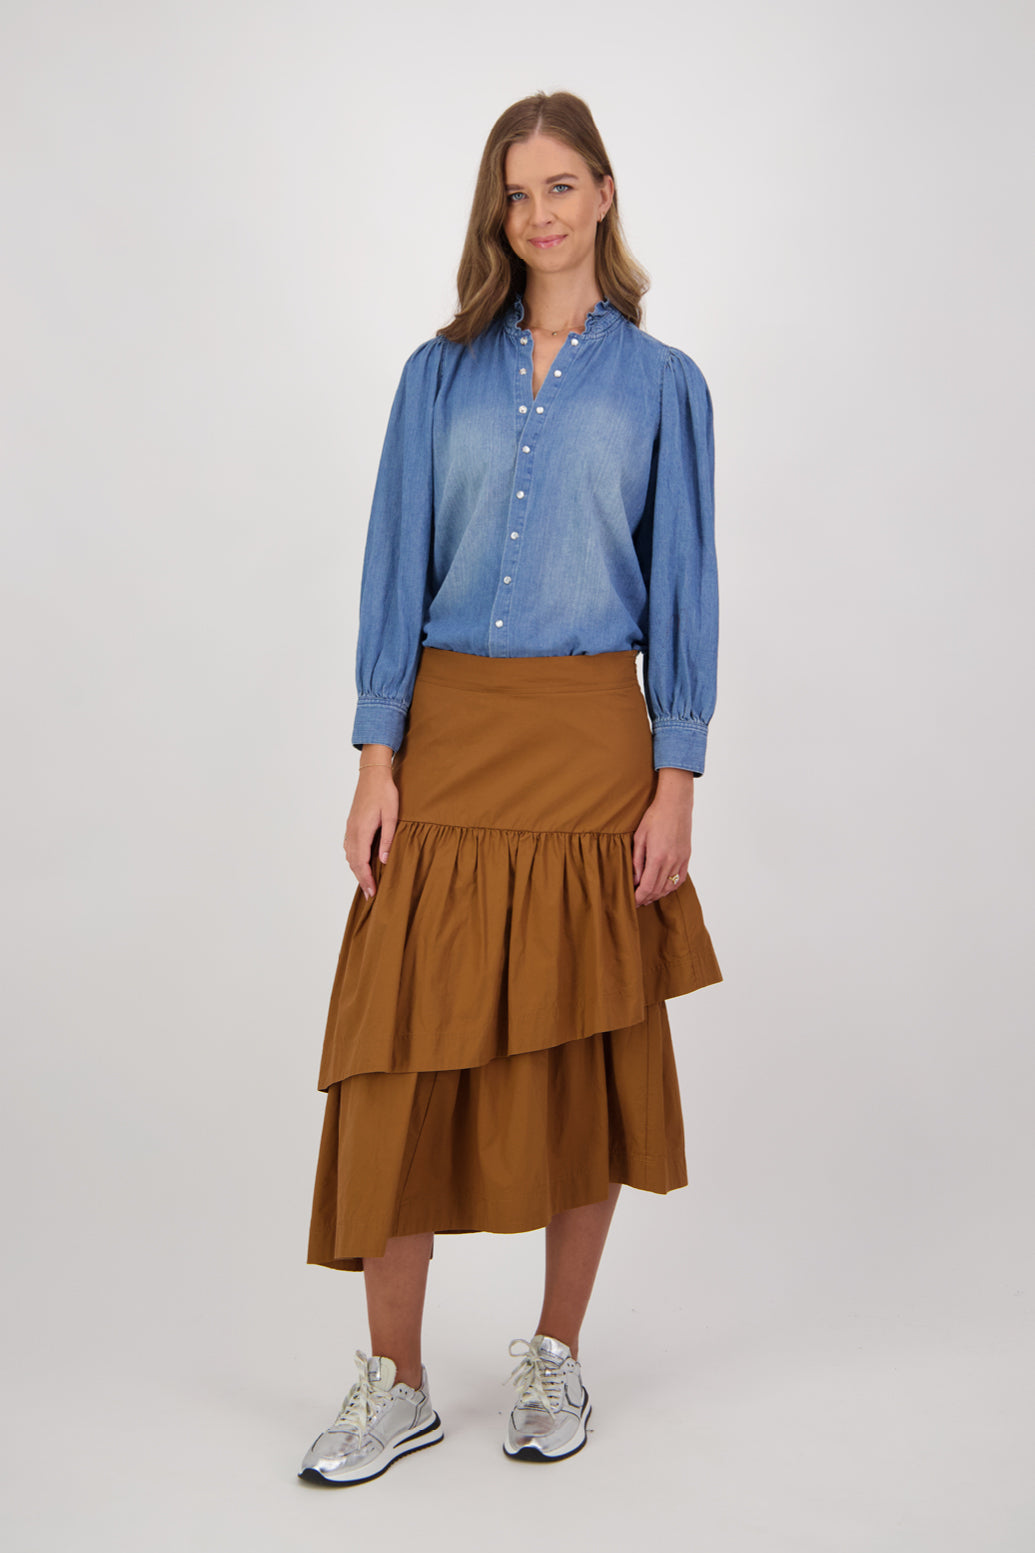 Charlotte Cotton Asymmetrical Frill Skirt - Tan